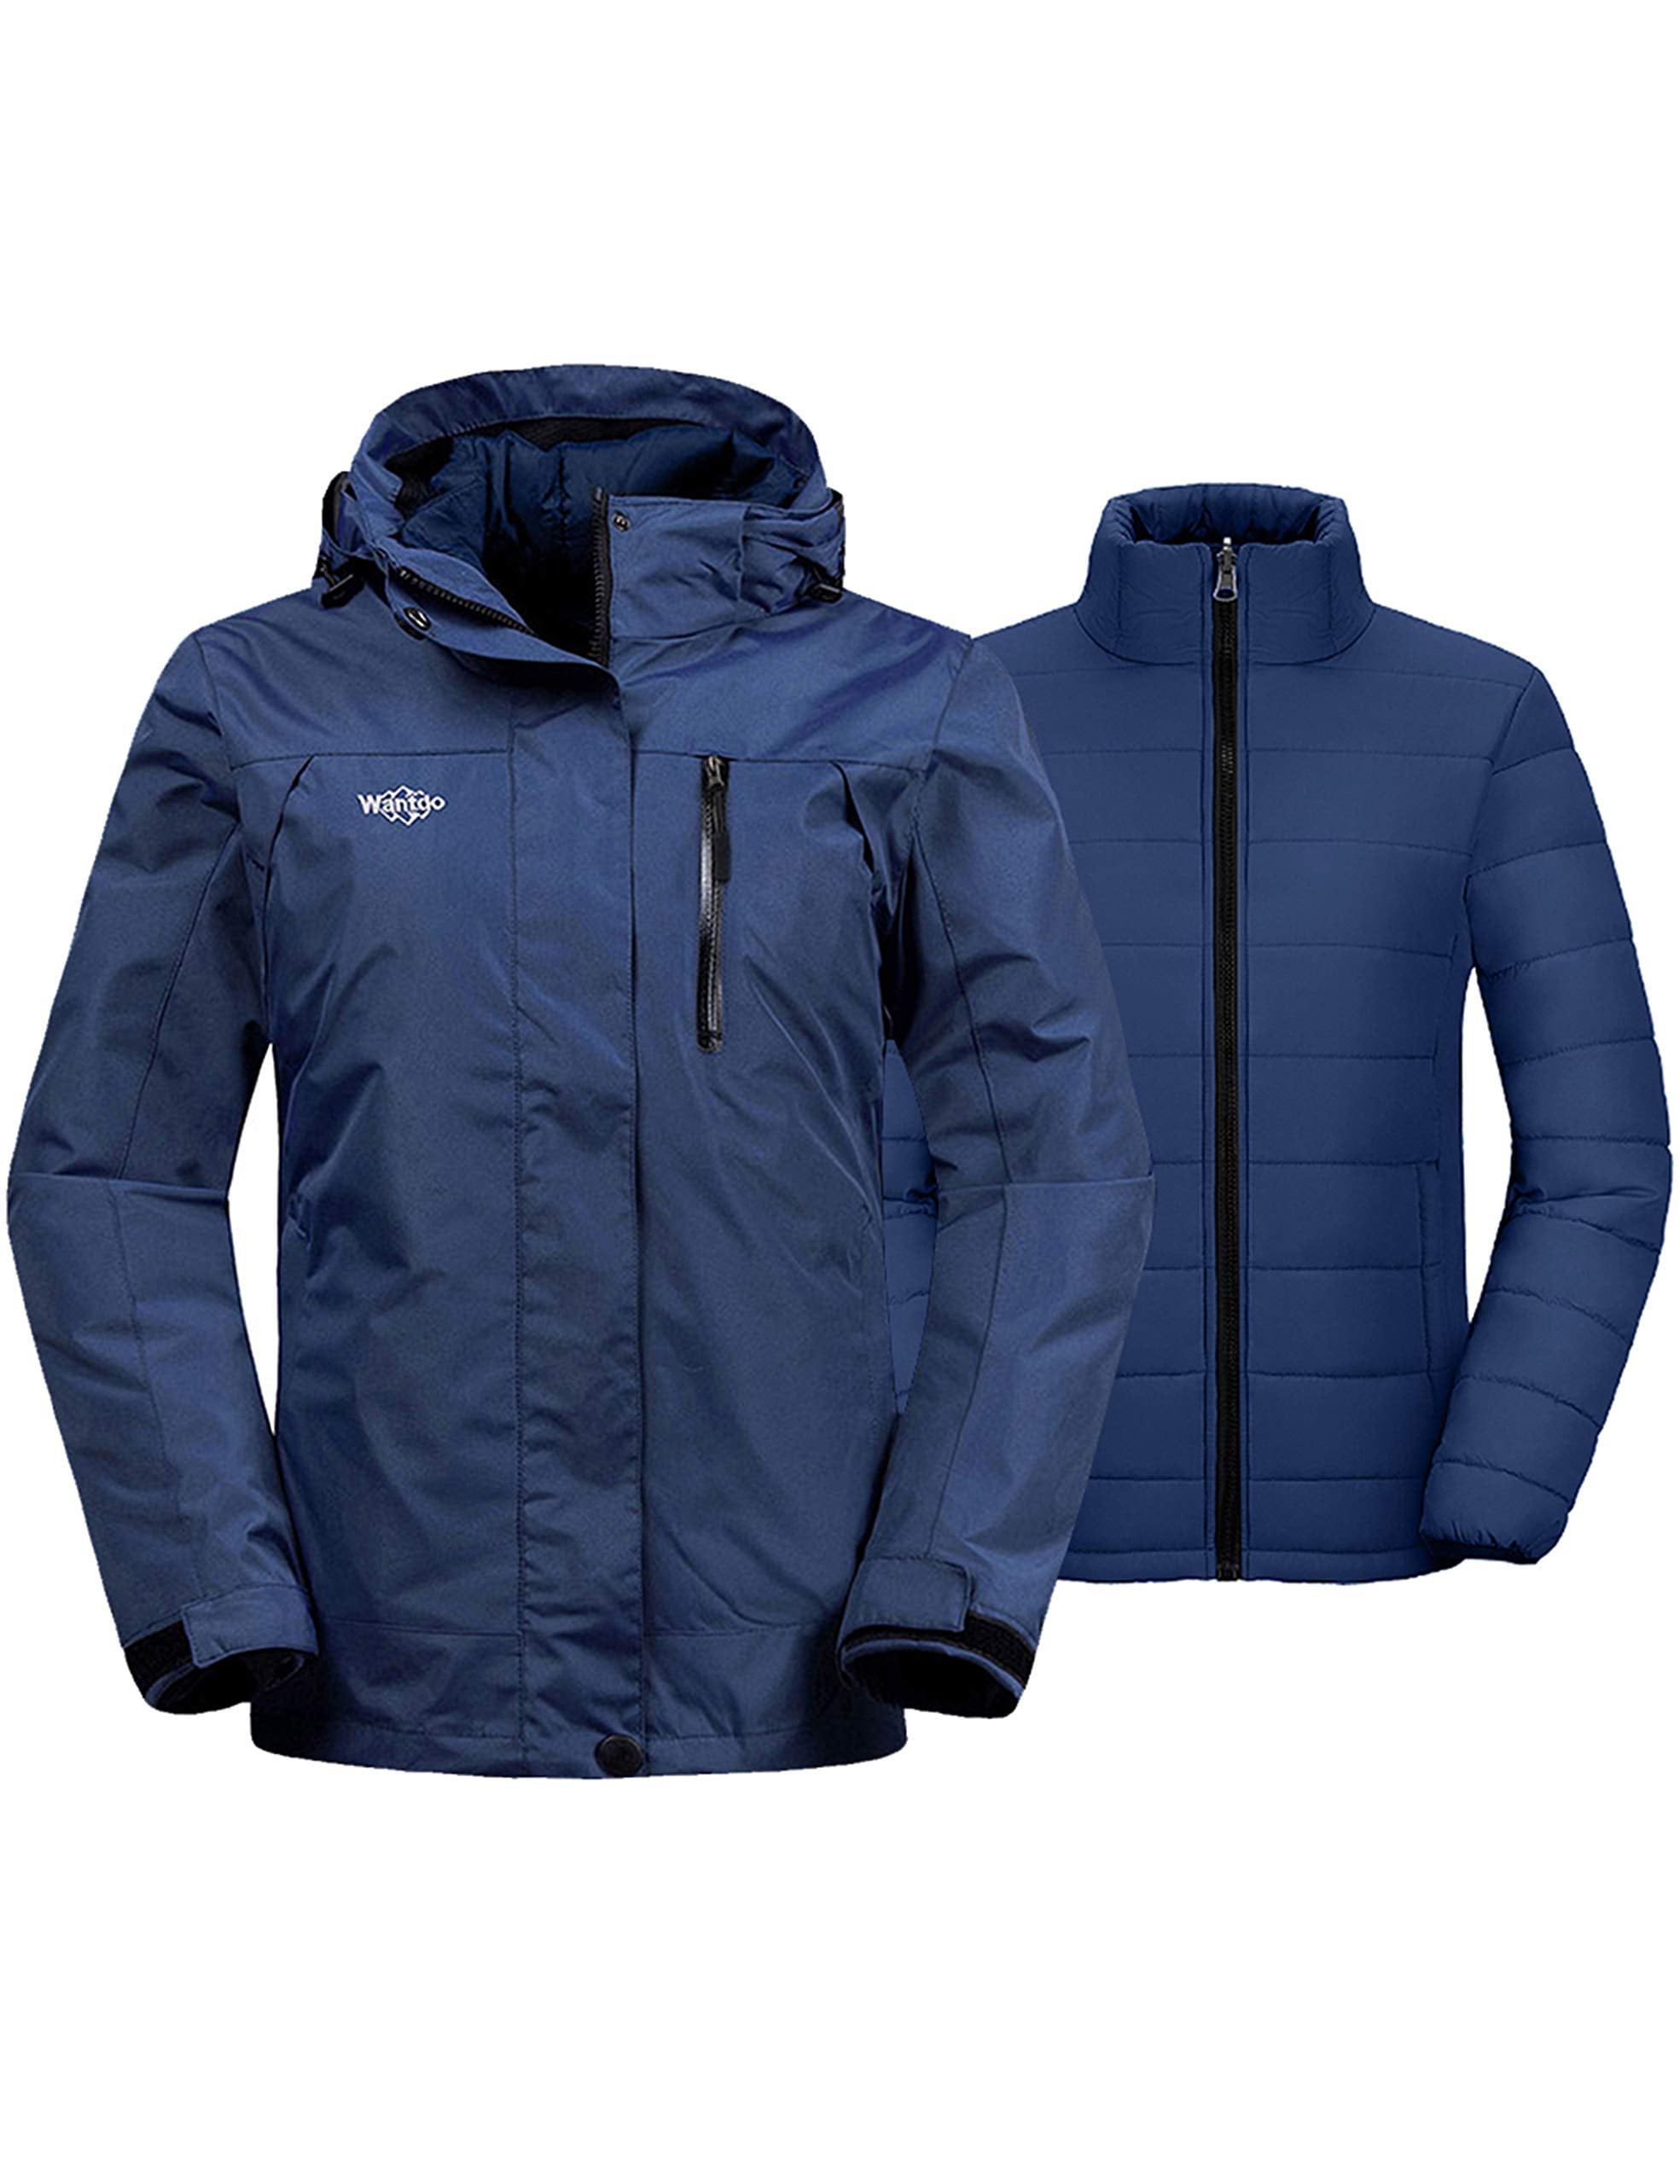 Mens Winter Jacket Waterproof Warm Snow Ski Jackets Faux Fur Fleece Rain Coats with Removable Hood and Windproof Cuffs 